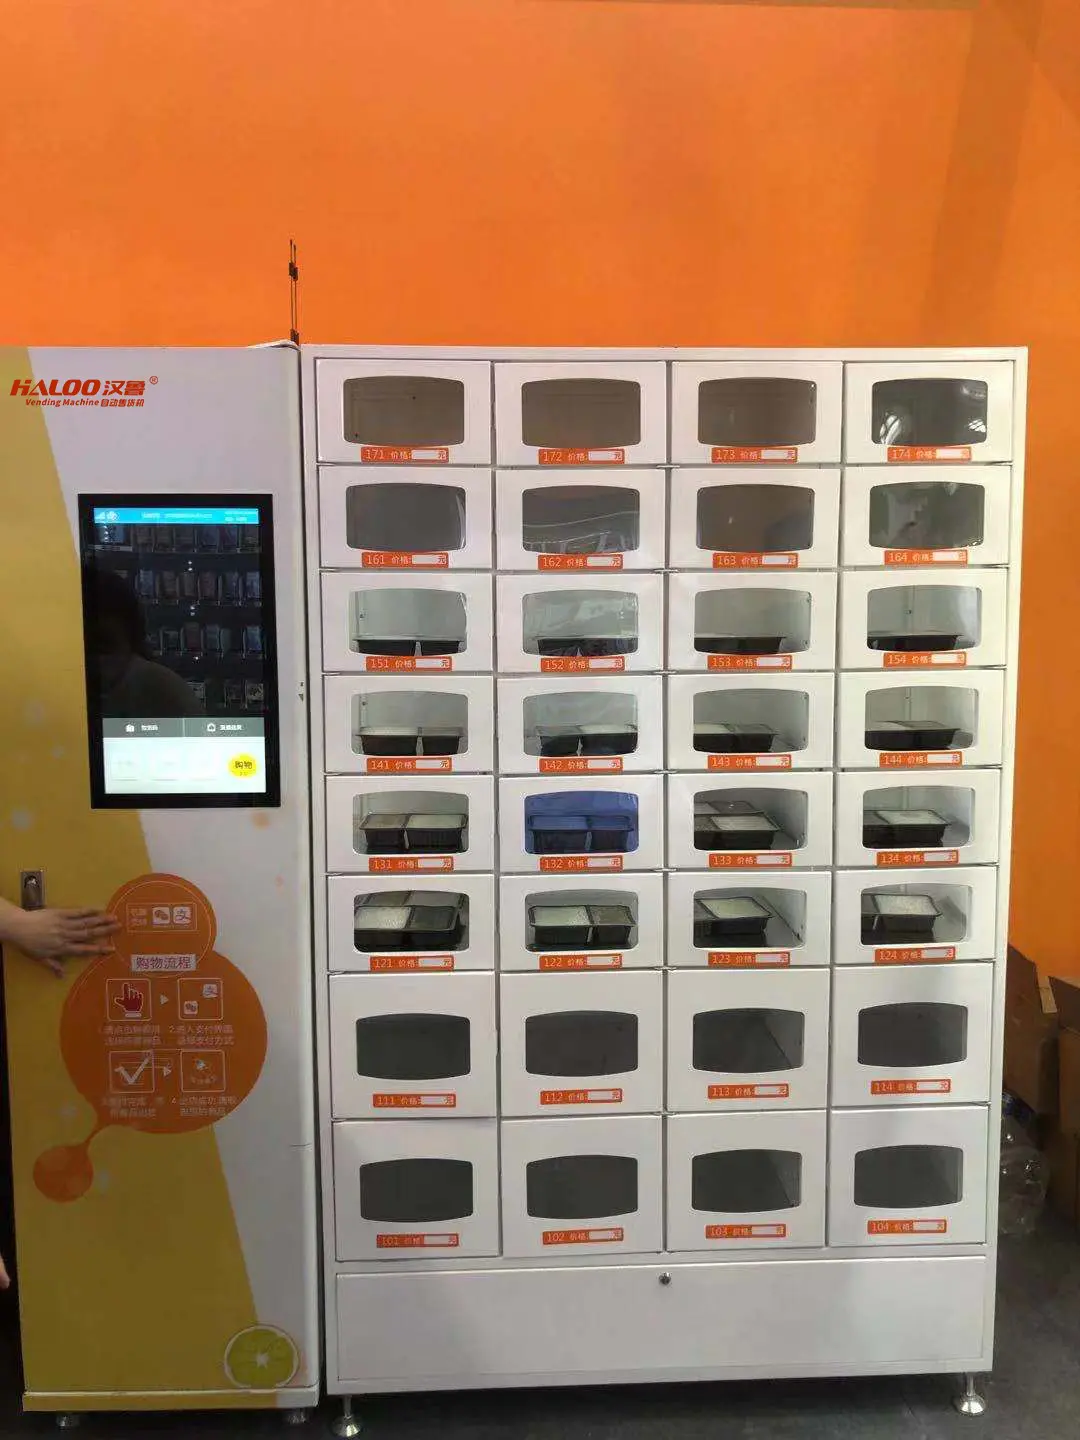 cost-effective heated food vending machine supplier for indoor